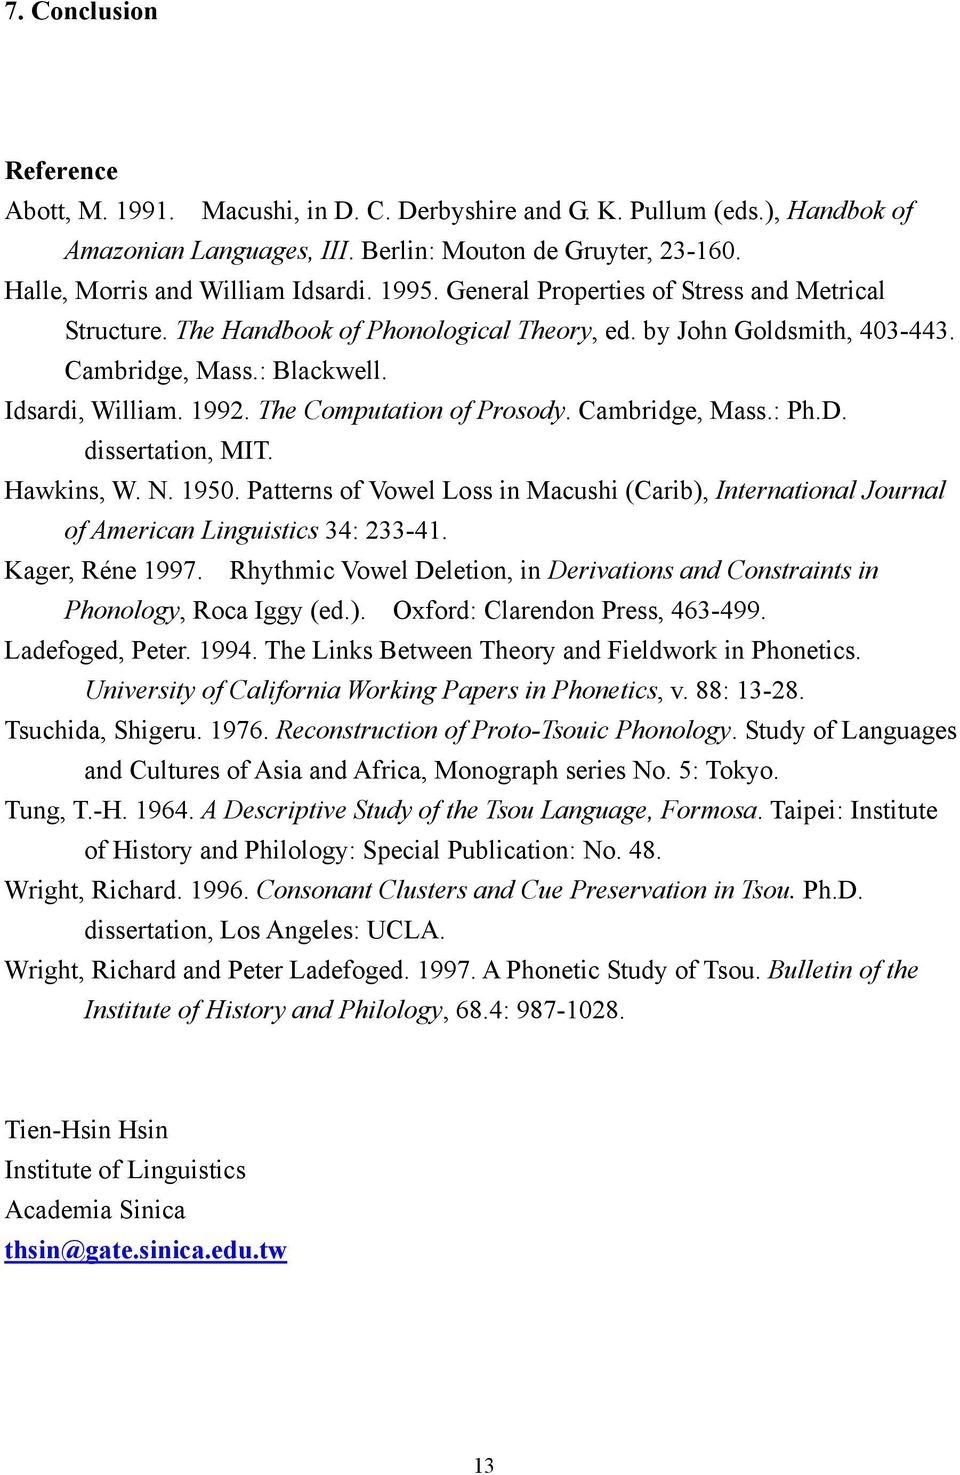 The Computation of Prosody. Cambridge, Mass.: Ph.D. dissertation, MIT. Hawkins, W. N. 1950. Patterns of Vowel Loss in Macushi (Carib), International Journal of American Linguistics 34: 233-41.